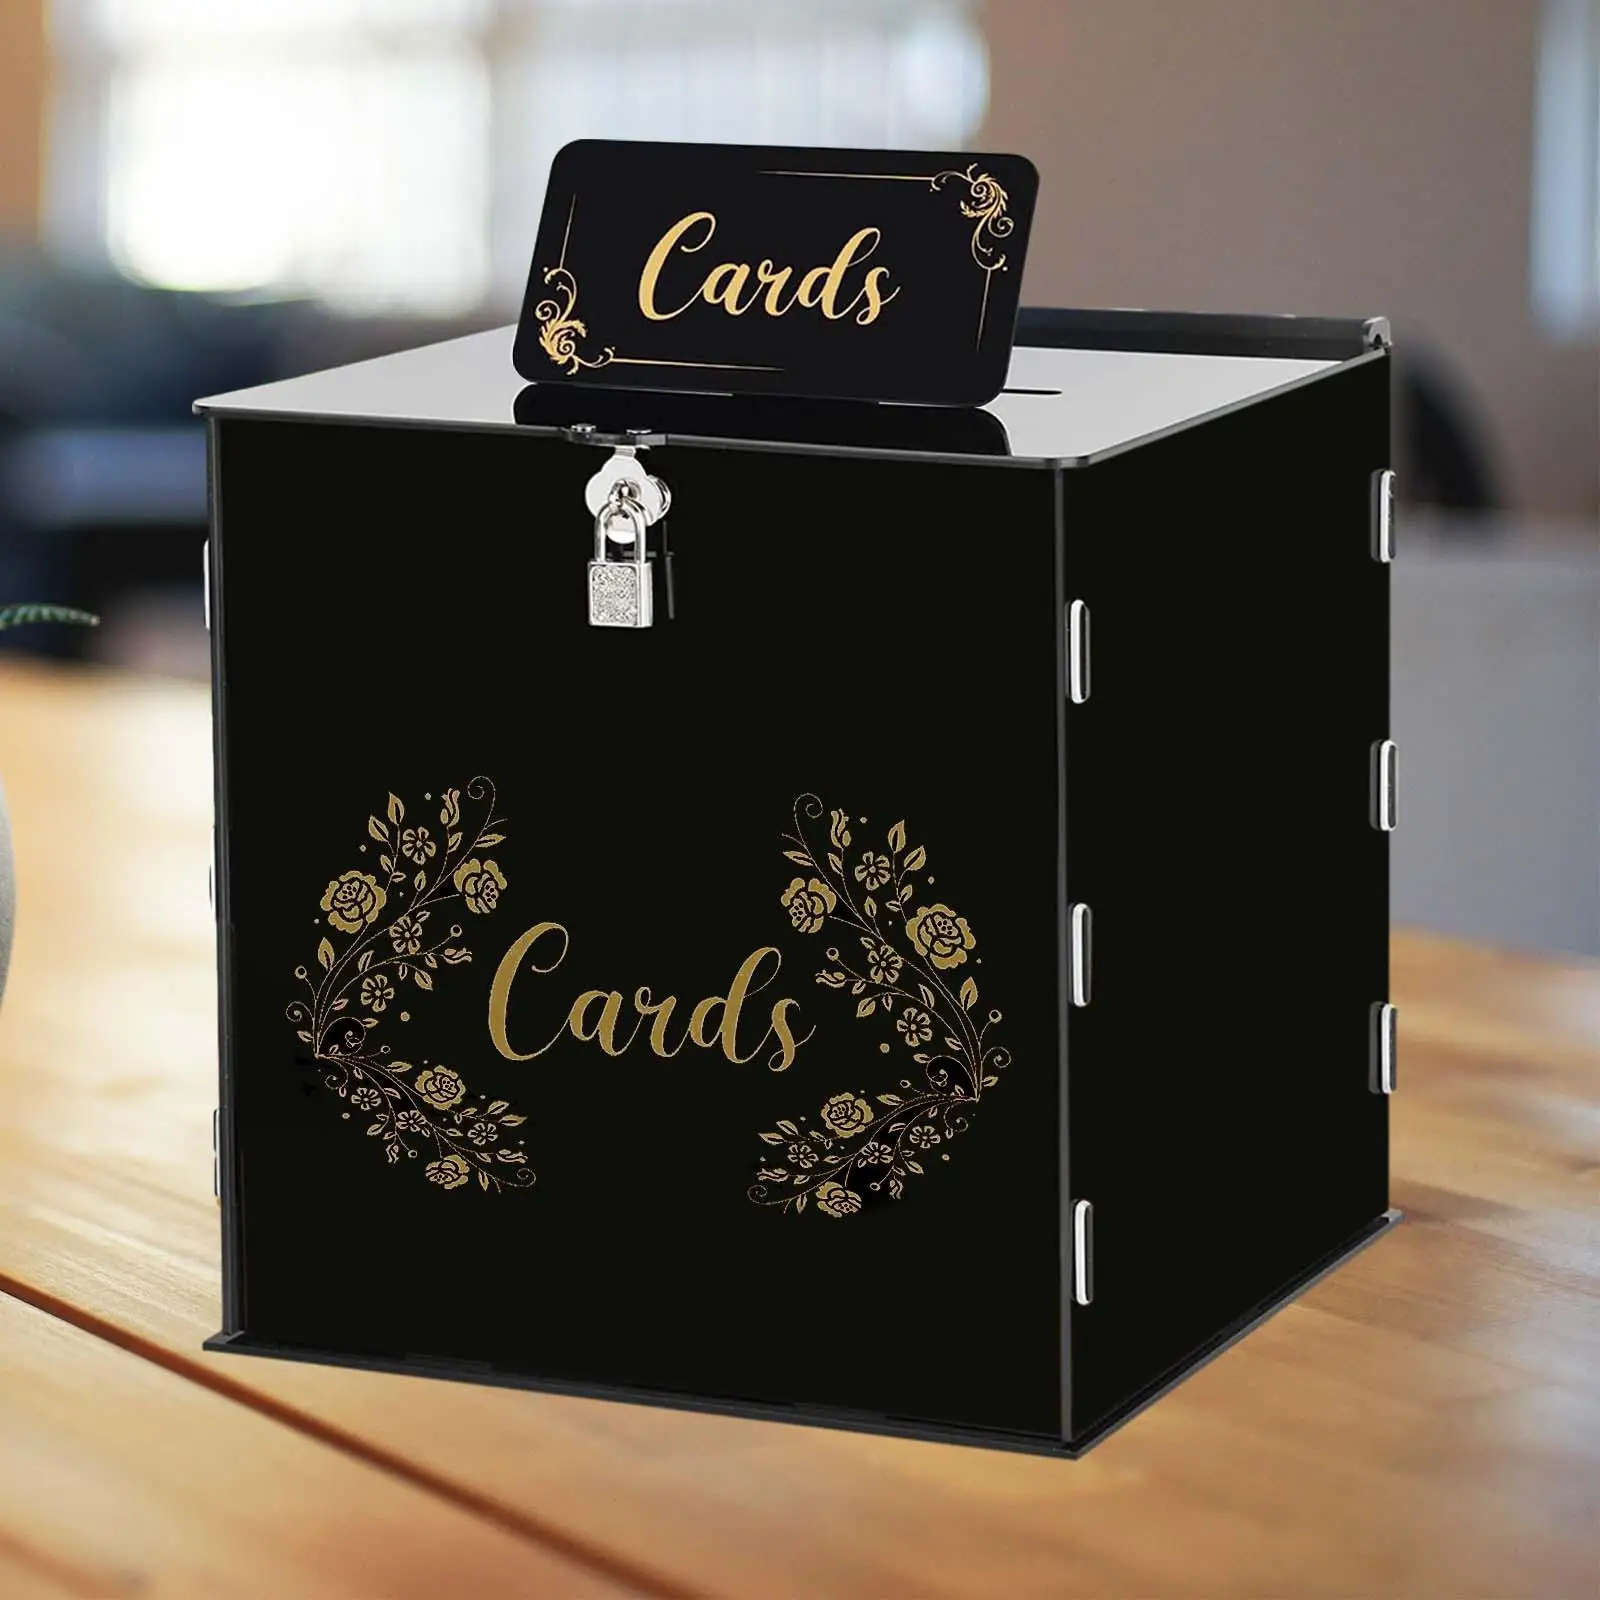 Acrylic Wedding Cards Box Wishing Card Box DIY Envelop Gift Card for Graduation Wedding Reception Events Parties Anniversary